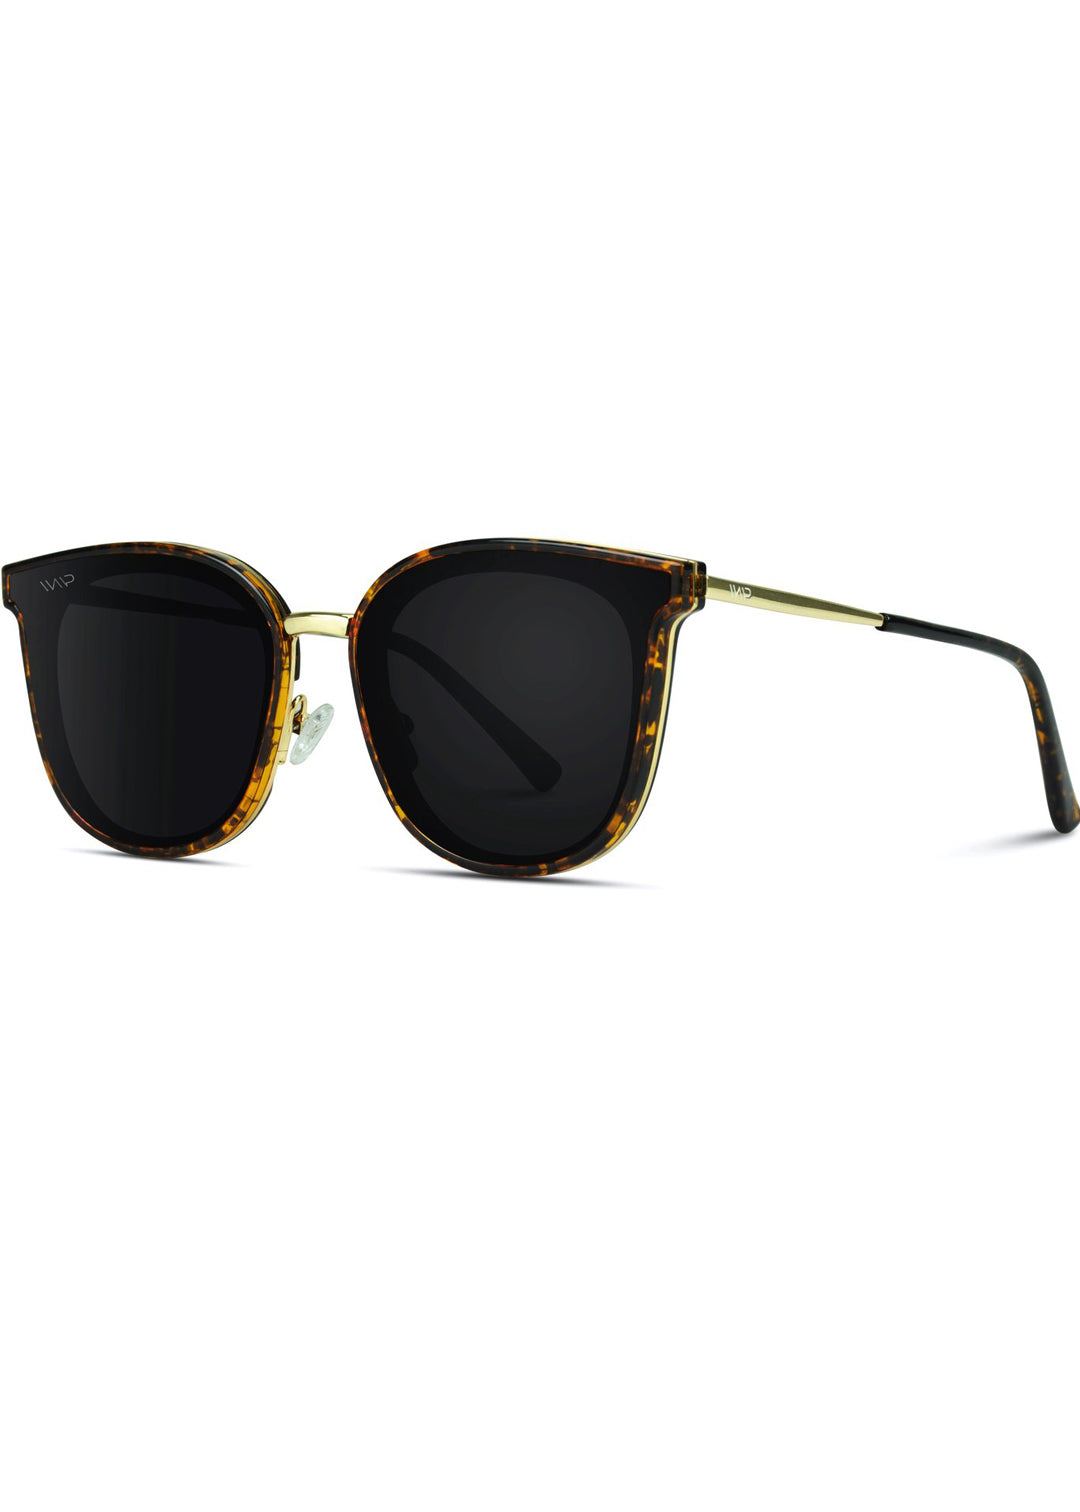 Tortoise Black Square Frame Polarized Sunglasses Accessories